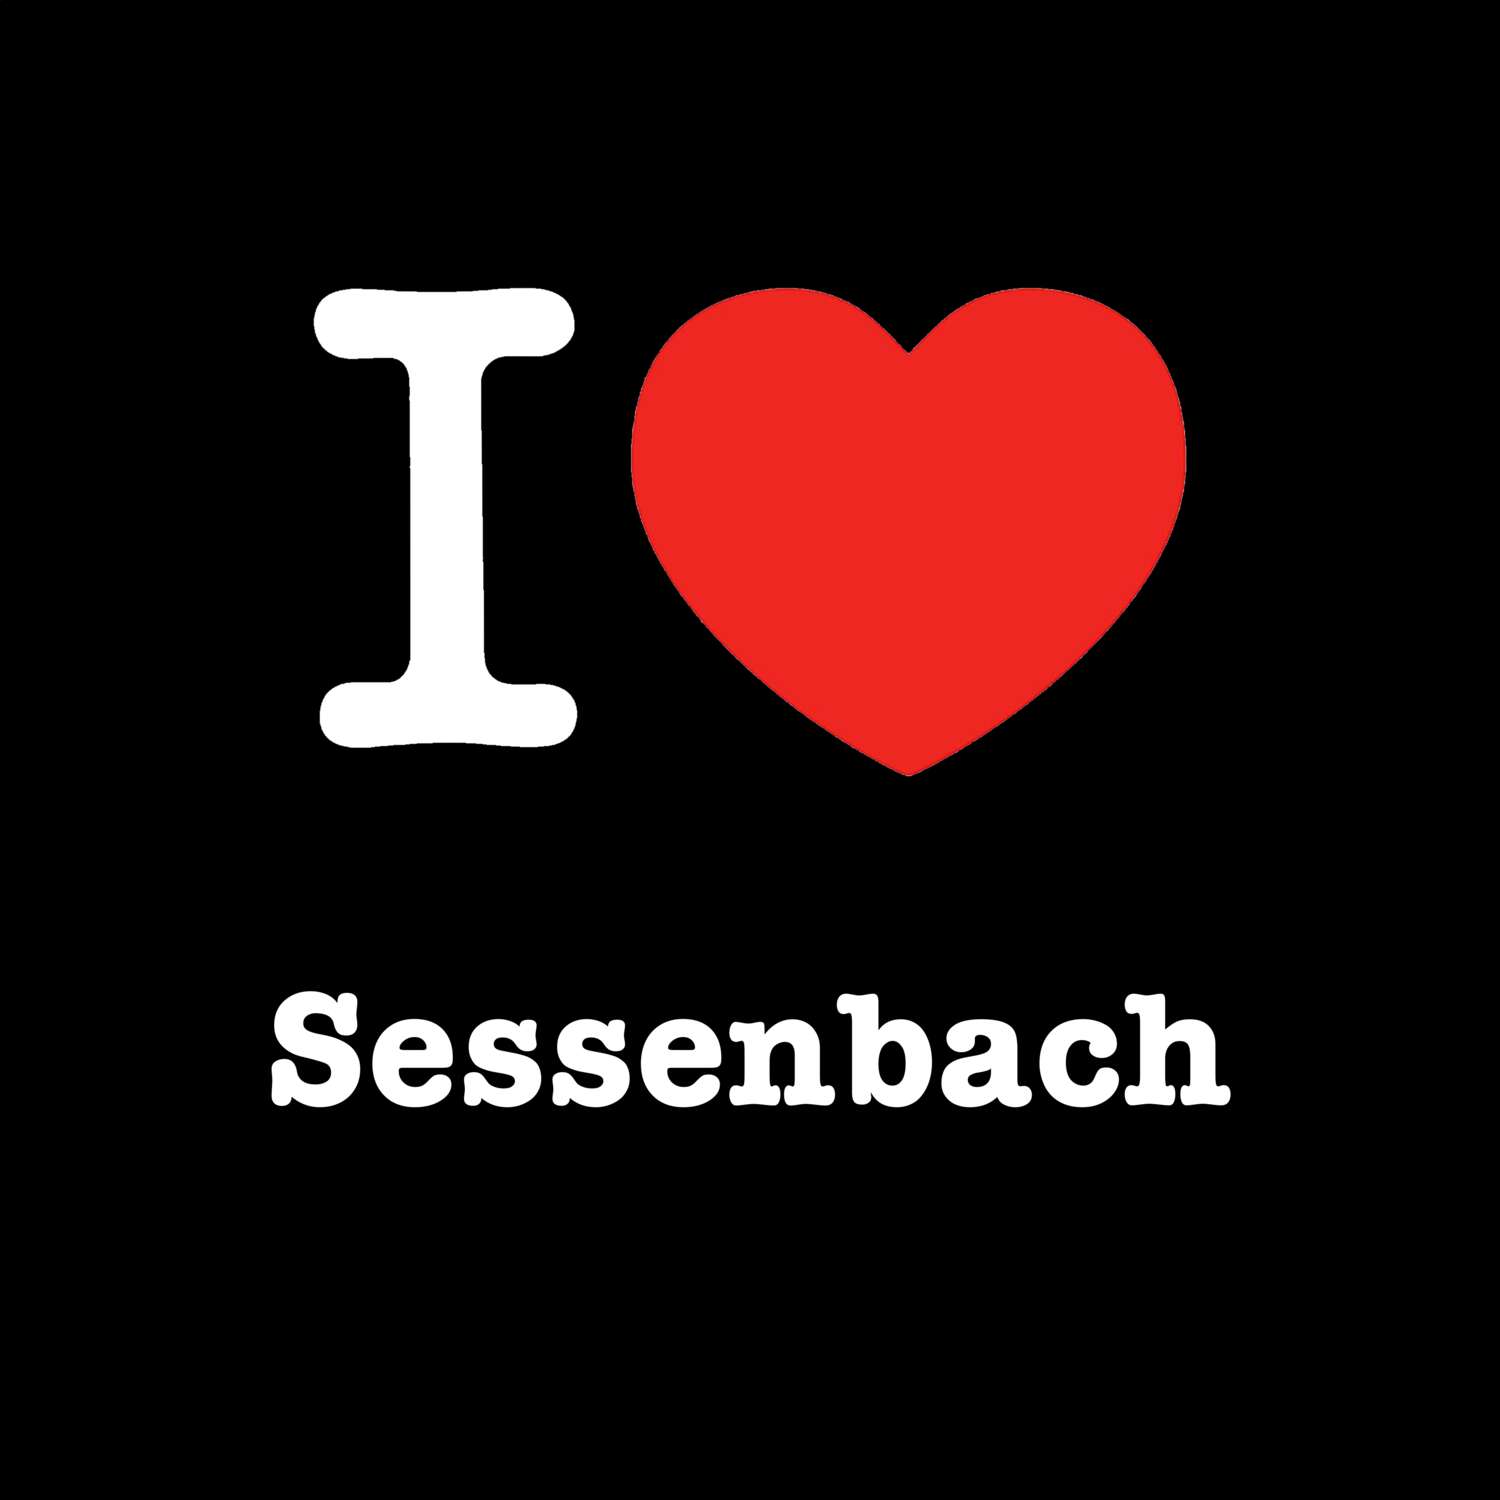 Sessenbach T-Shirt »I love«